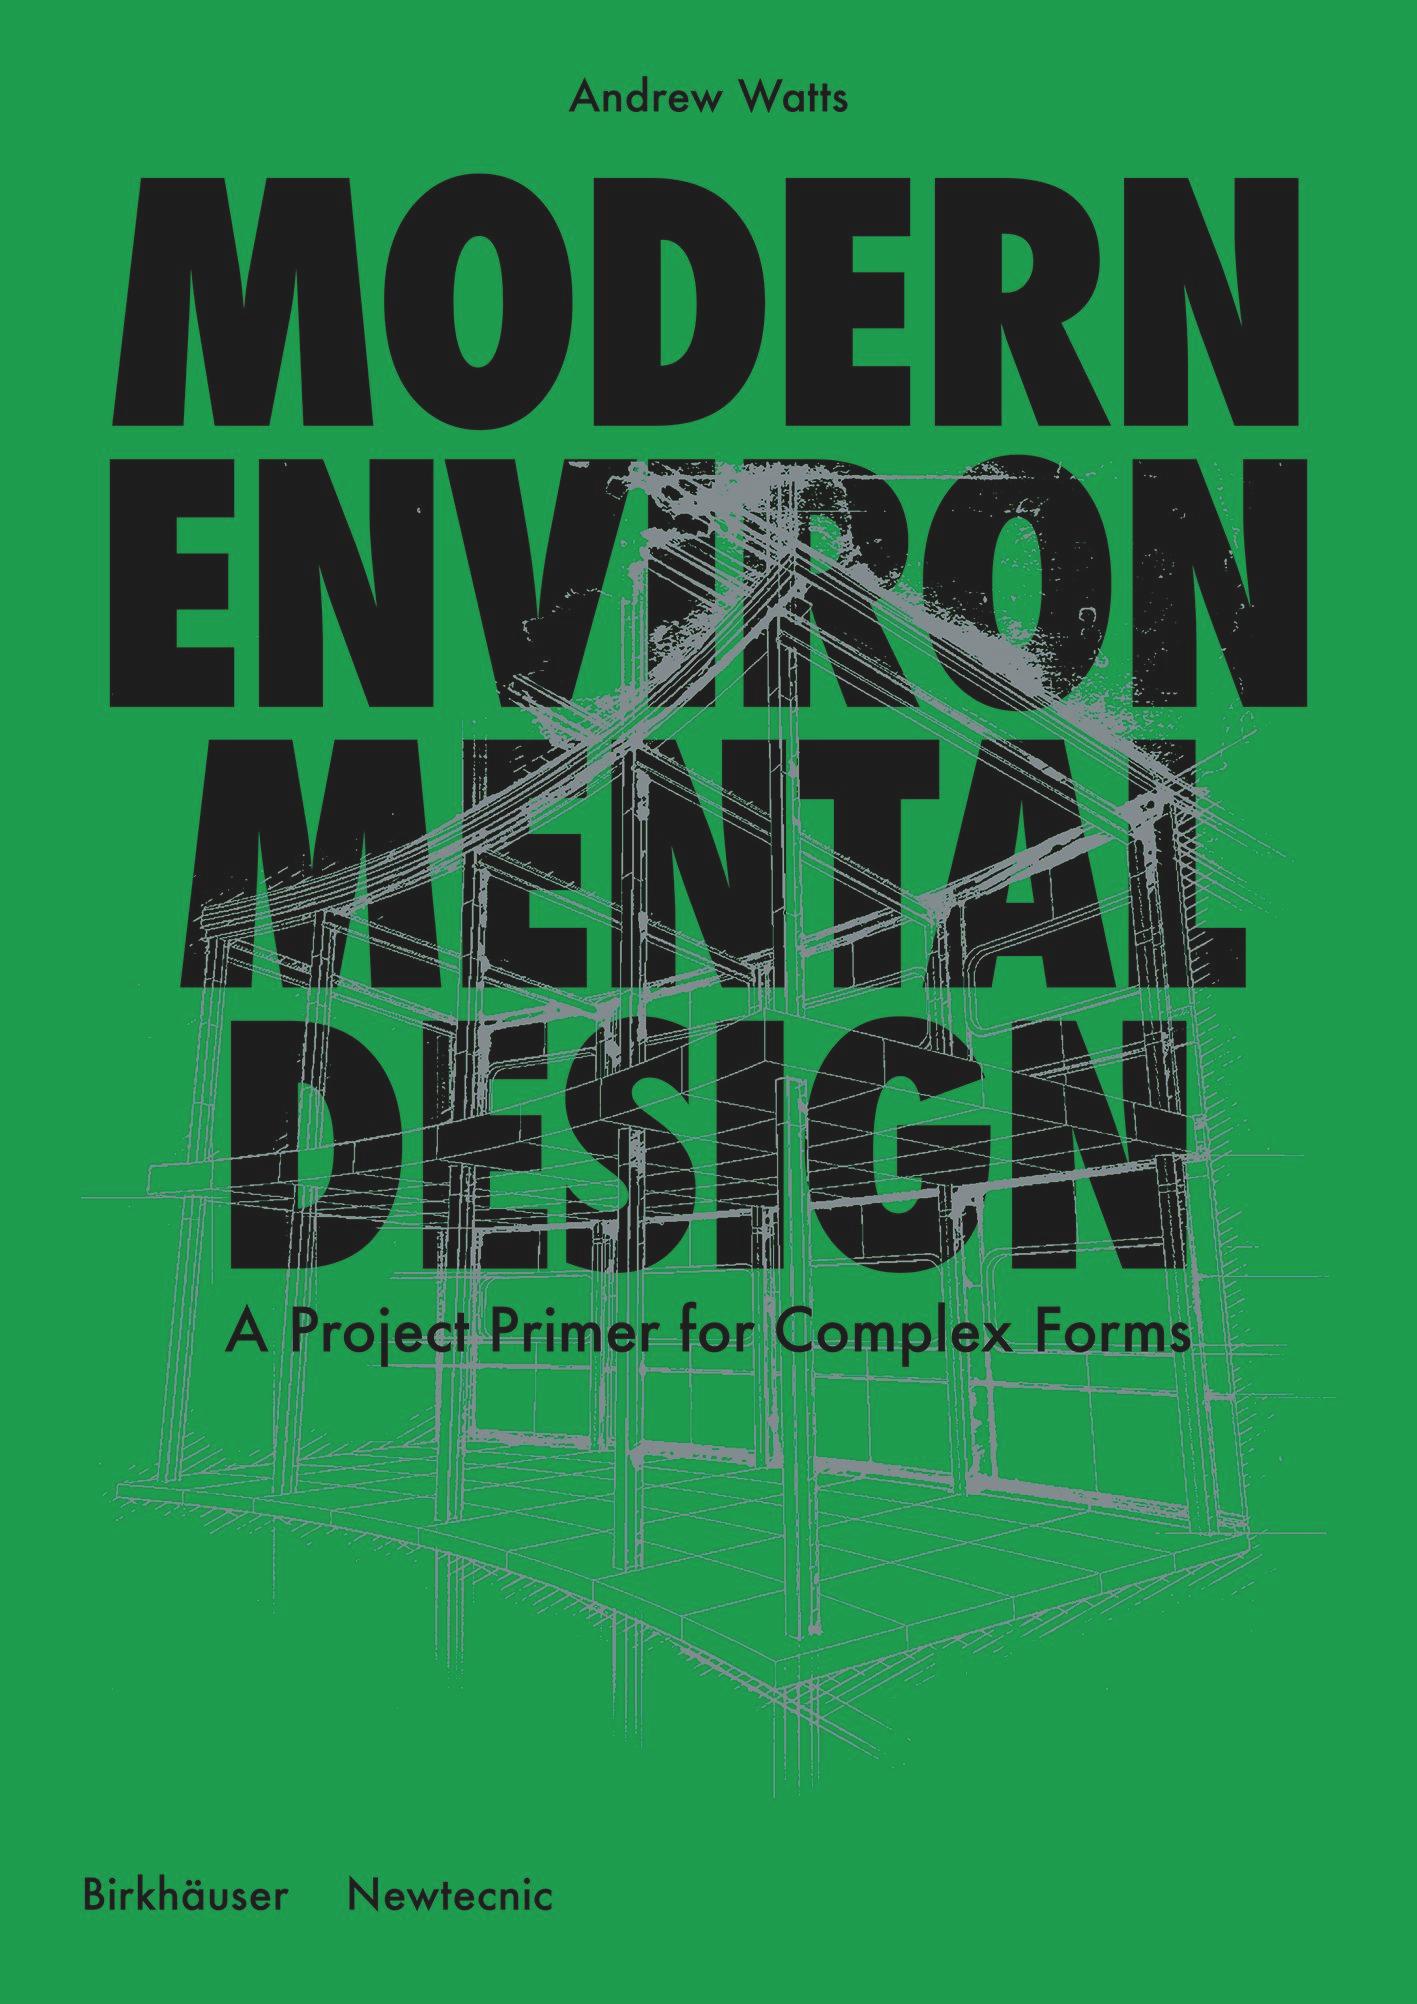 Modern Environmental Design's cover